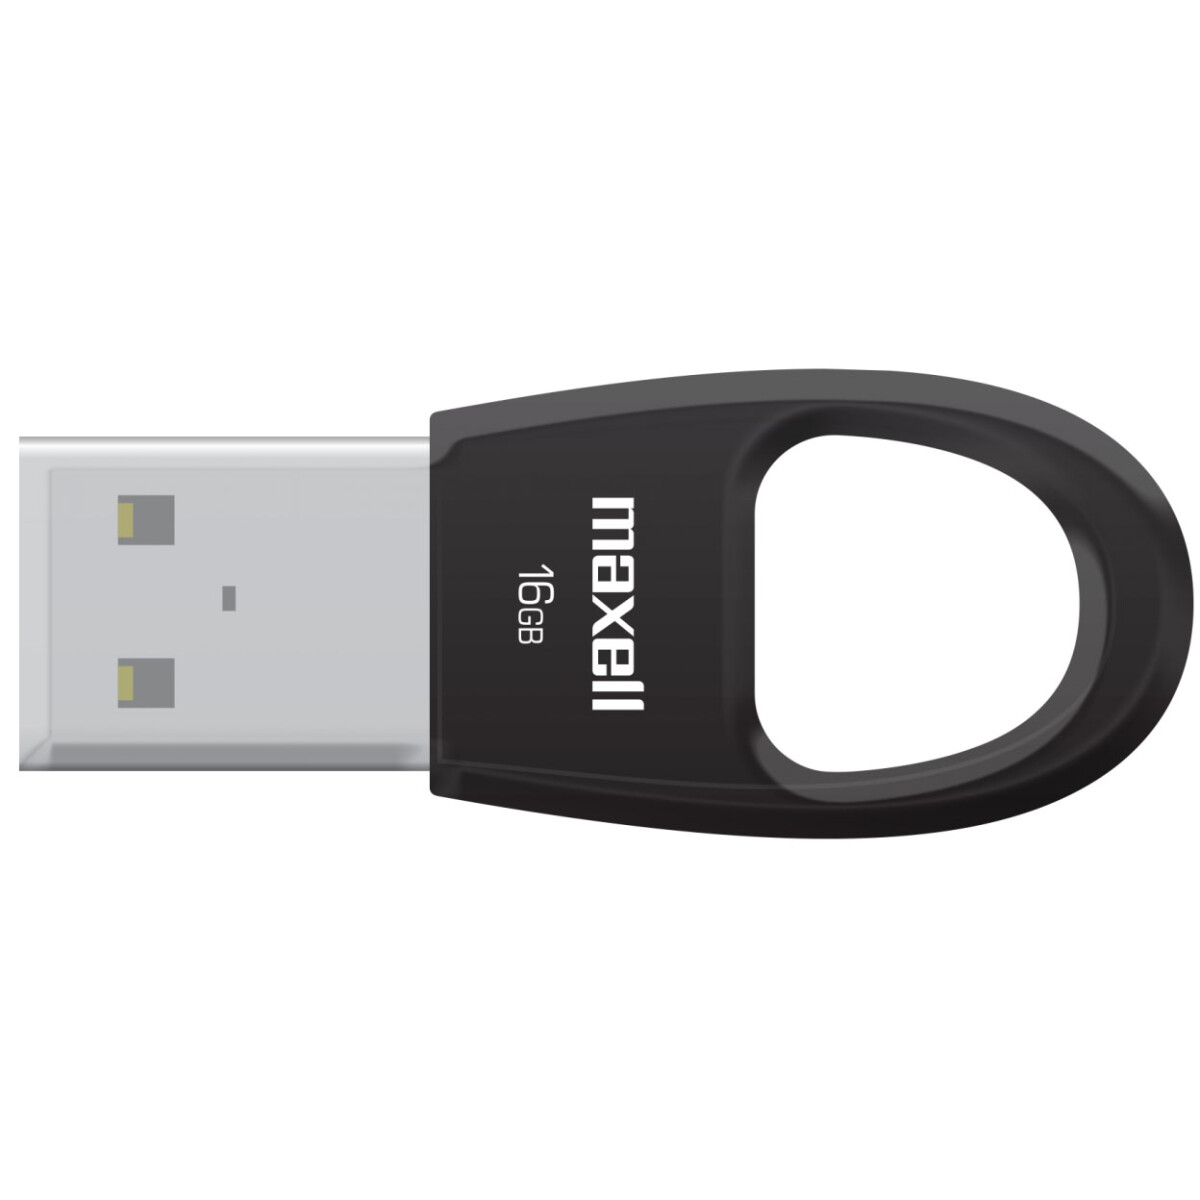 Pendrive Maxell Key 32GB USB 2.0 - 001 